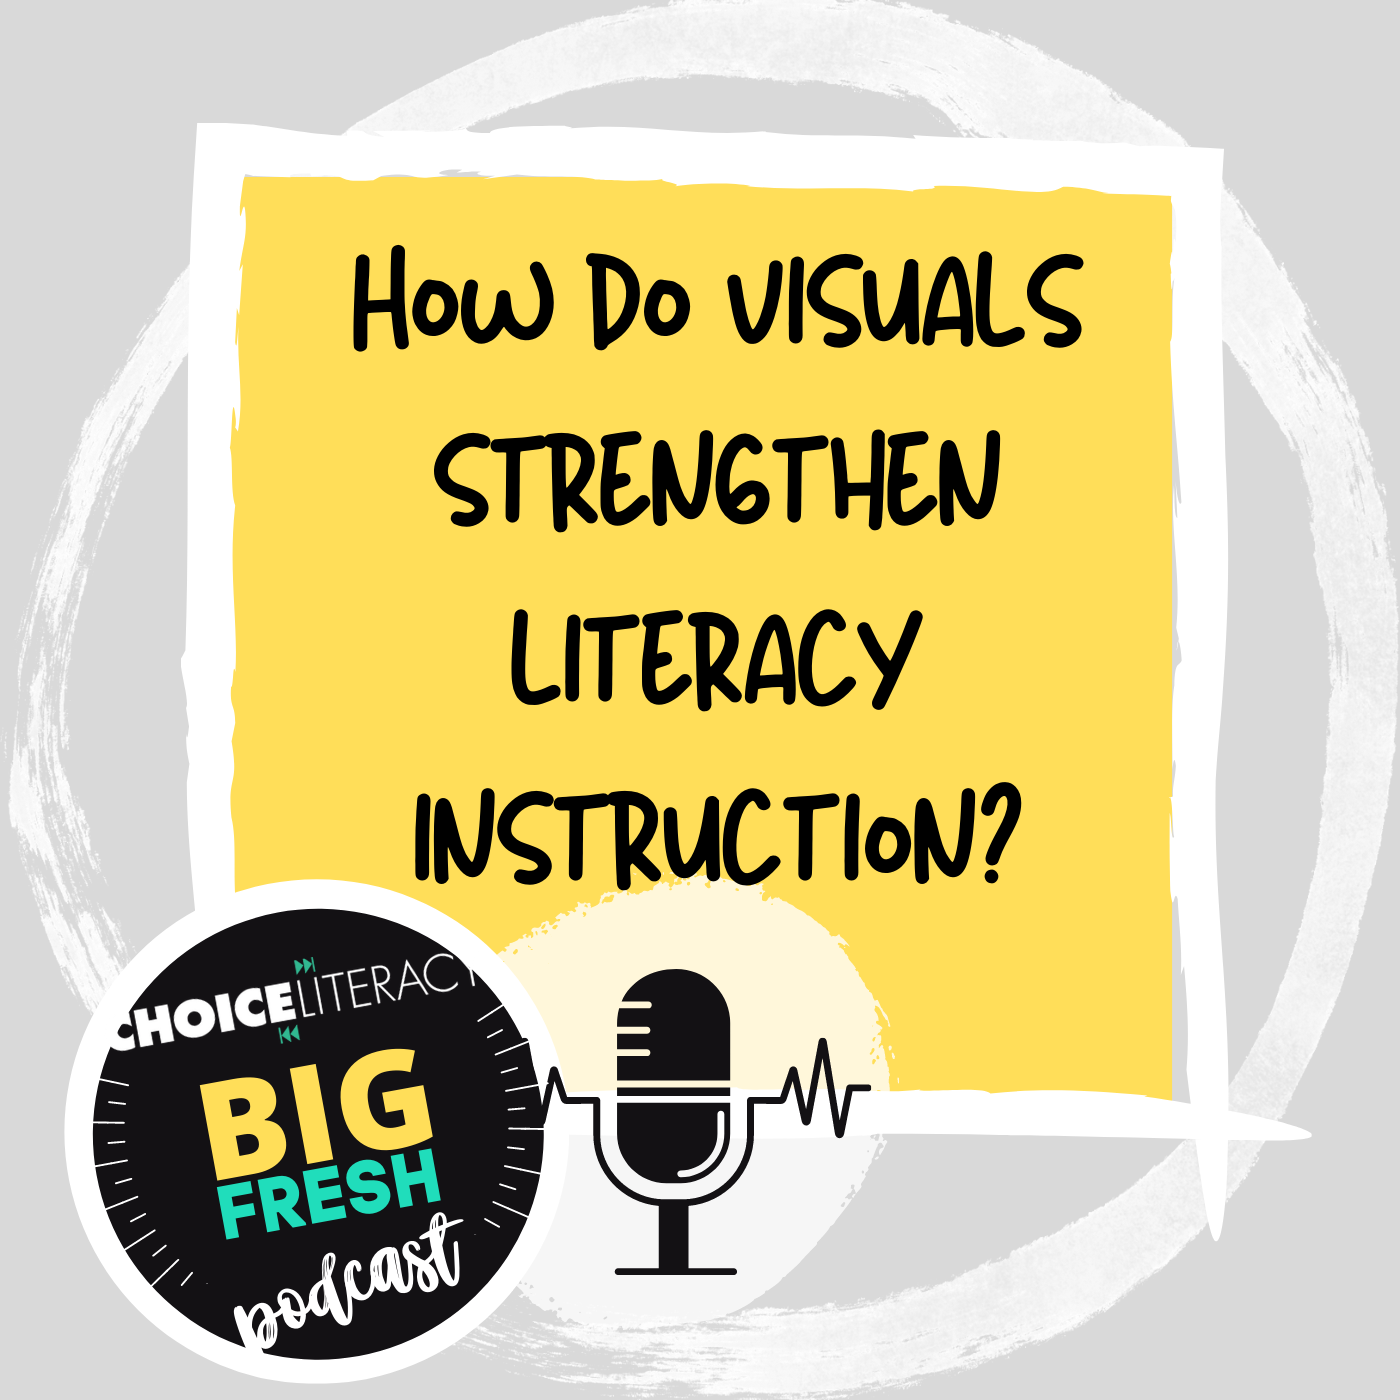 How do visuals strengthen literacy instruction?